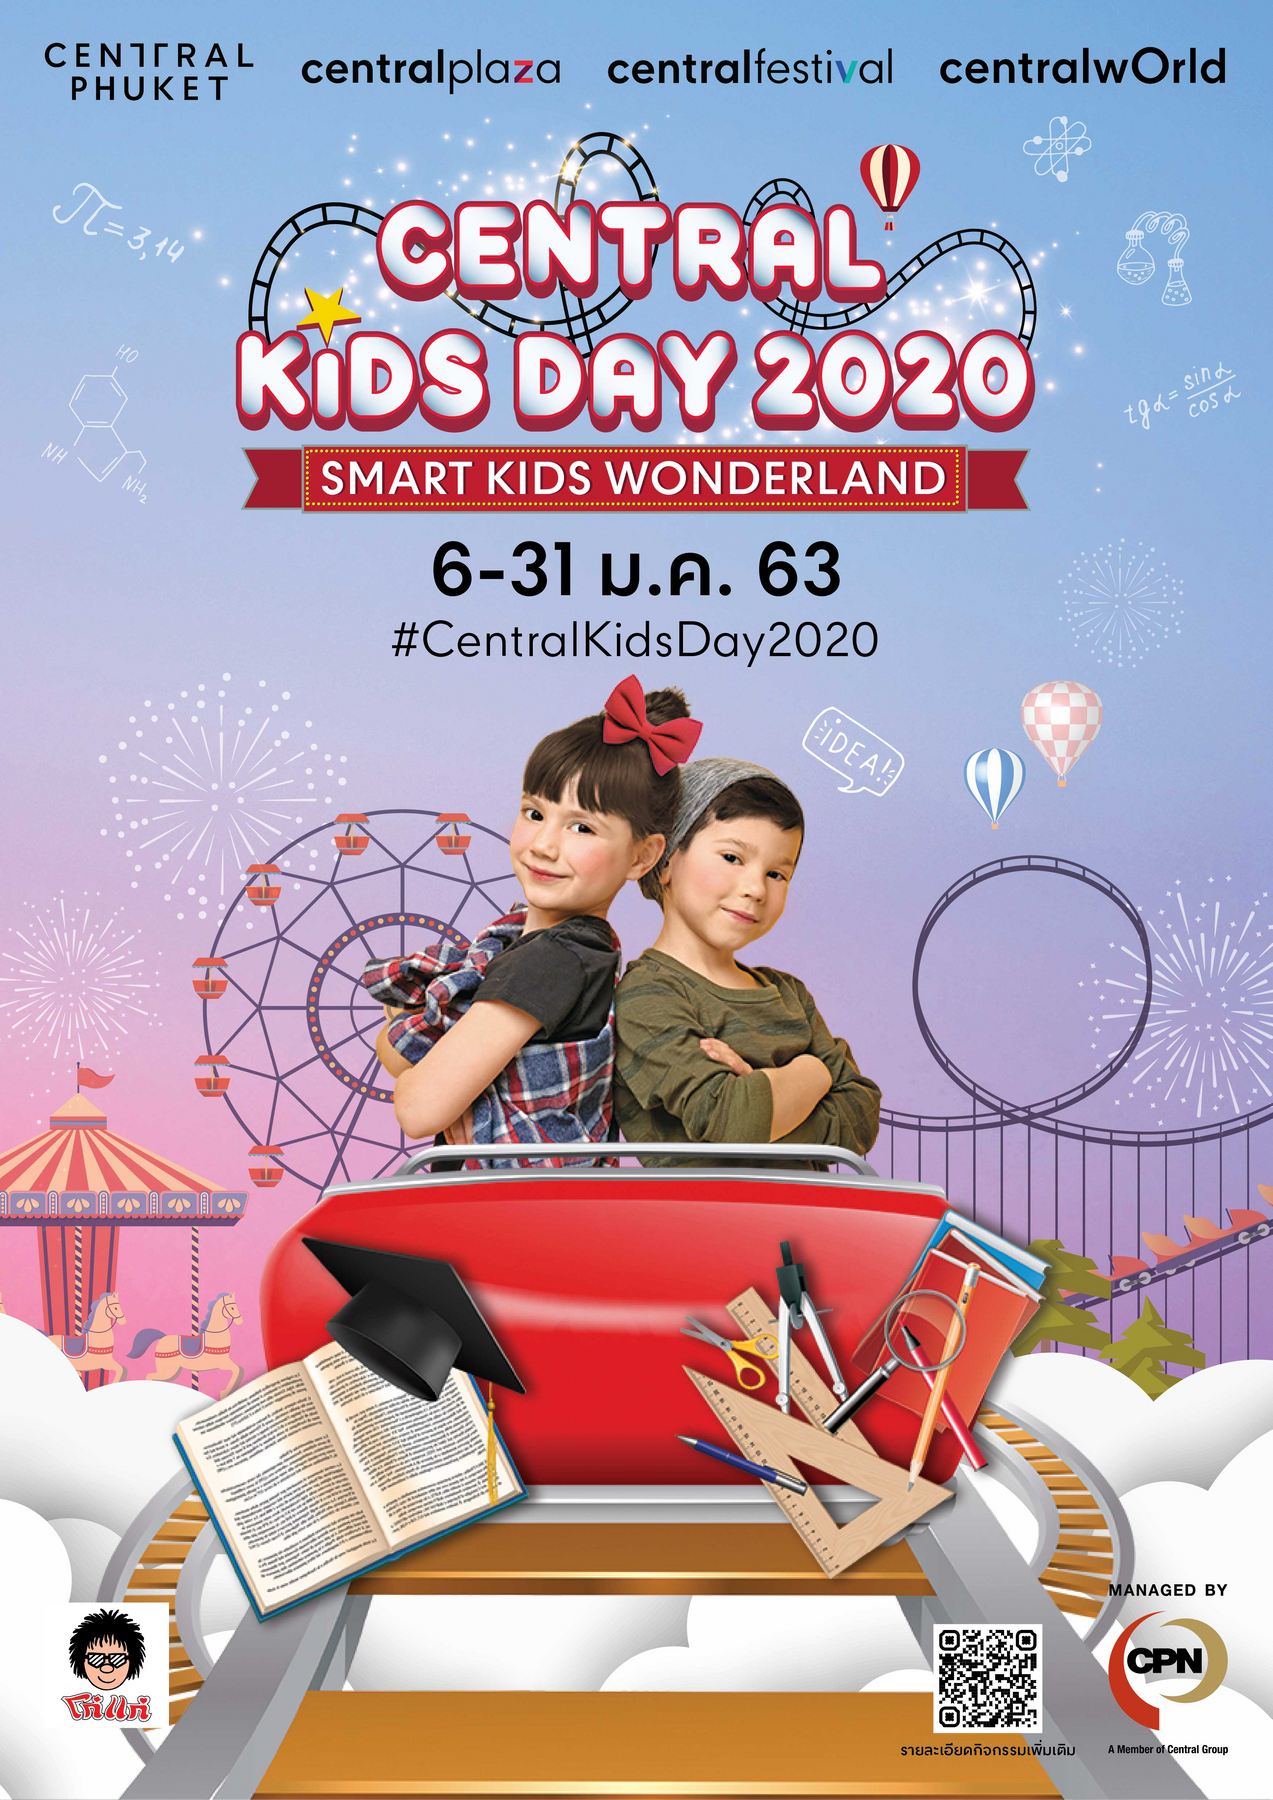 Central Kids Day 2020-Smart Kids Wonderland สนุกกับการผจญภัยในดินแดนมหัศจรรย์